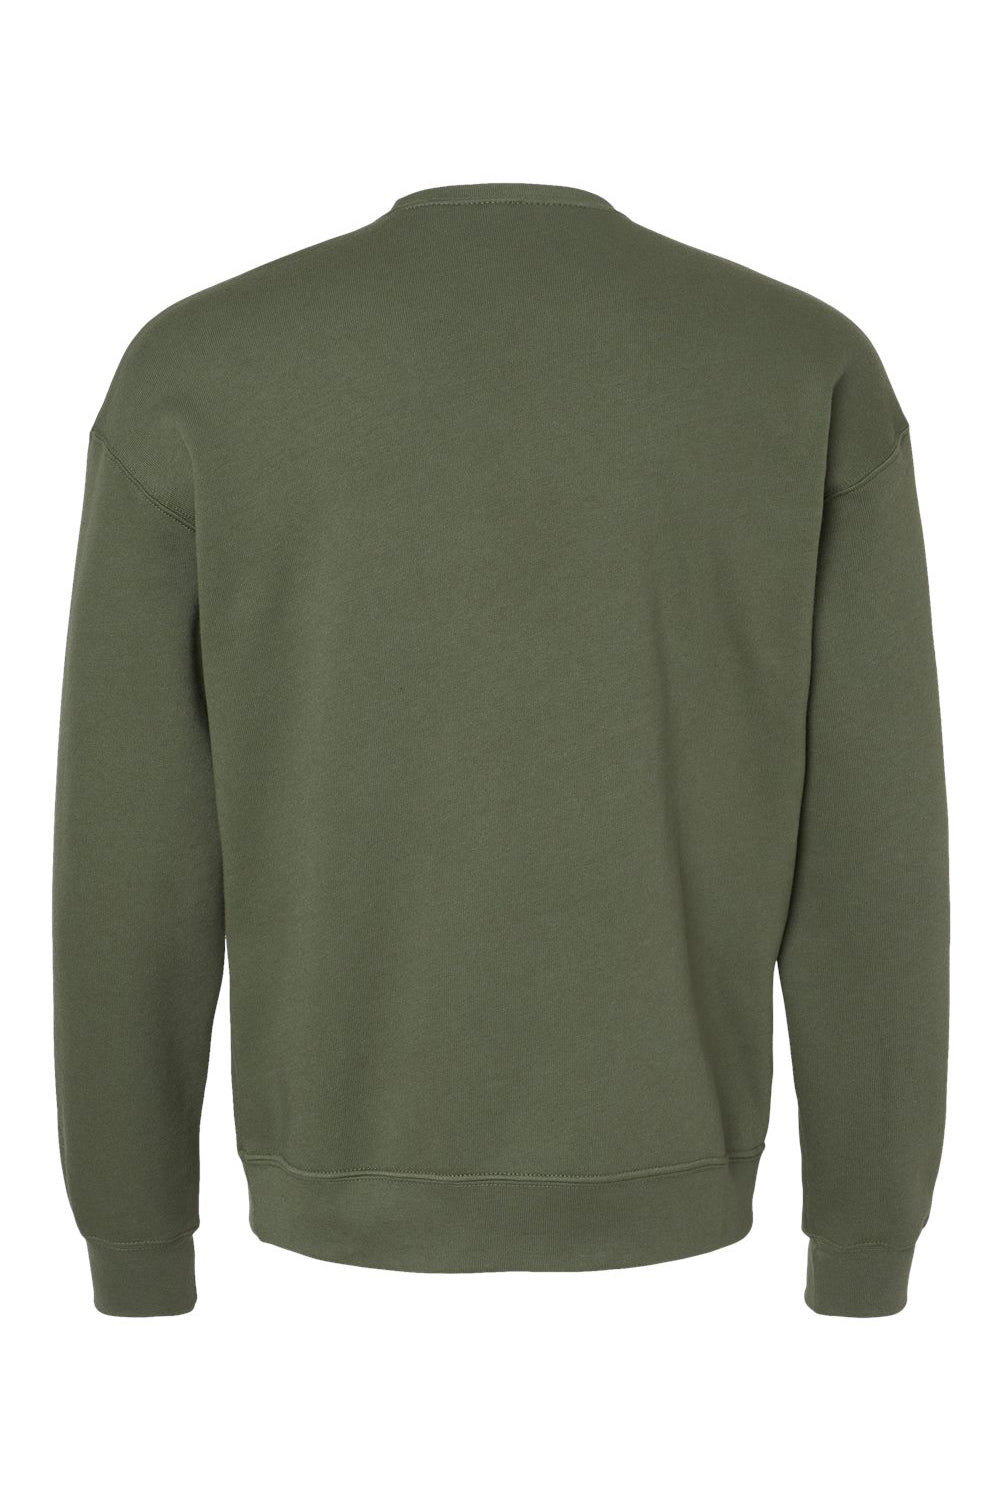 Bella + Canvas BC3945/3945 Mens Fleece Crewneck Sweatshirt Military Green Flat Back